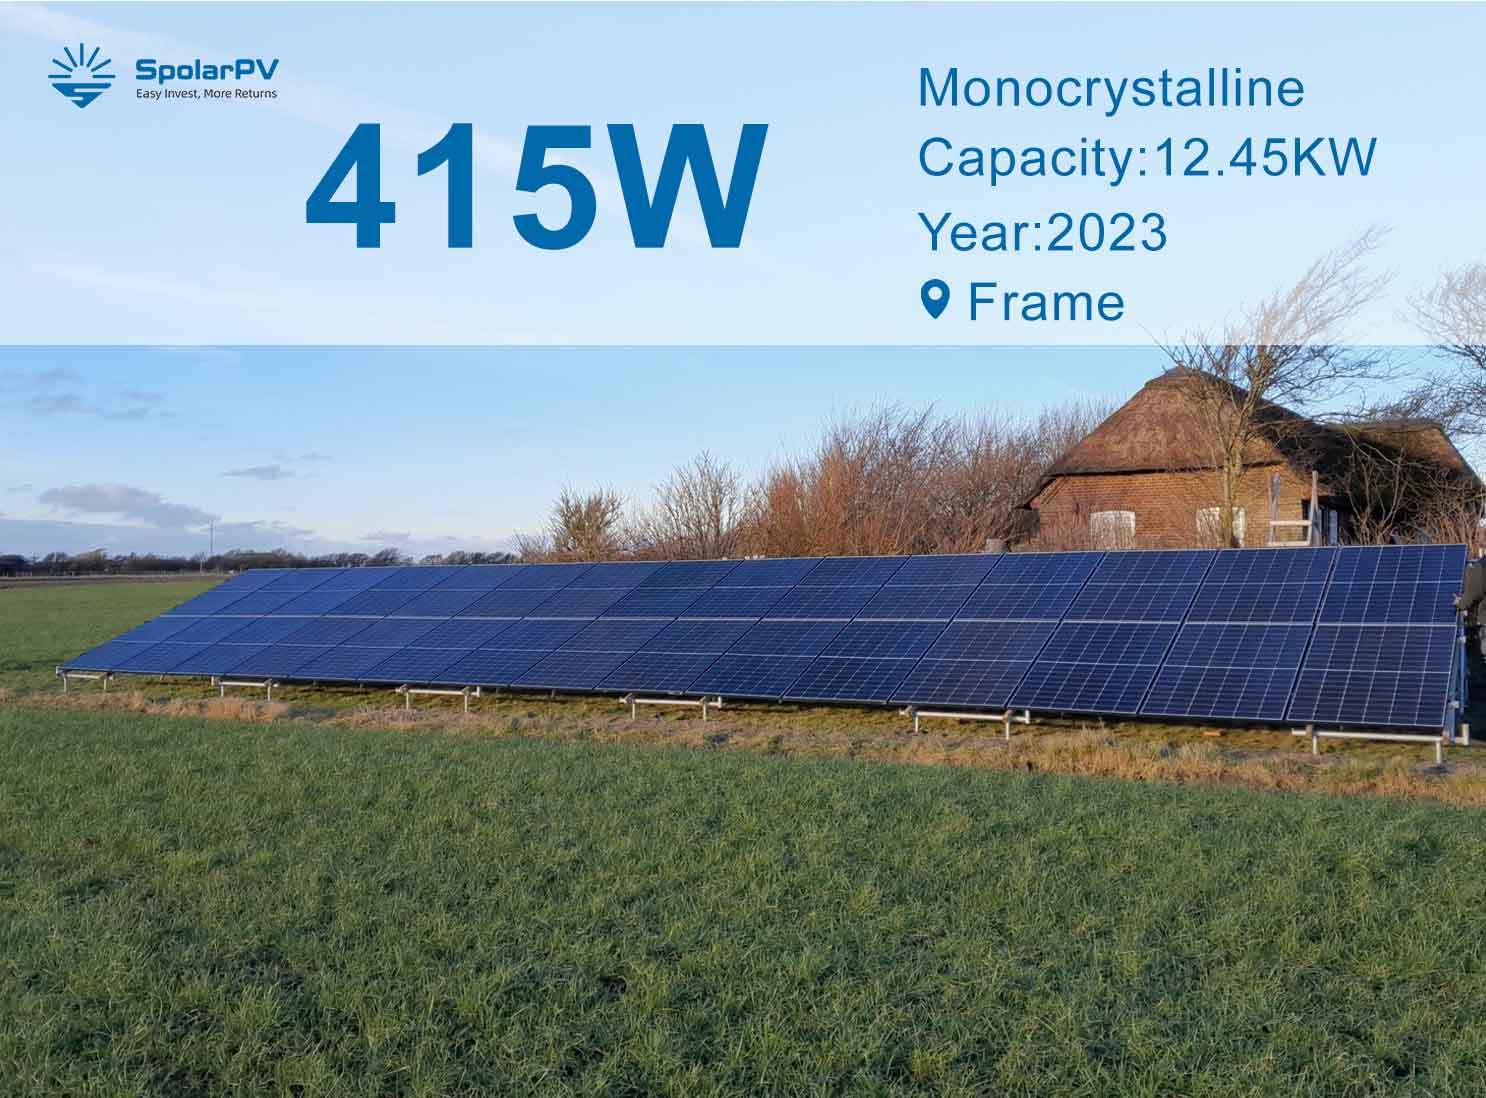 SpolarPV Solar Solutions beleuchtet Hillerød, Dänemark: Ein Kundenerfolg